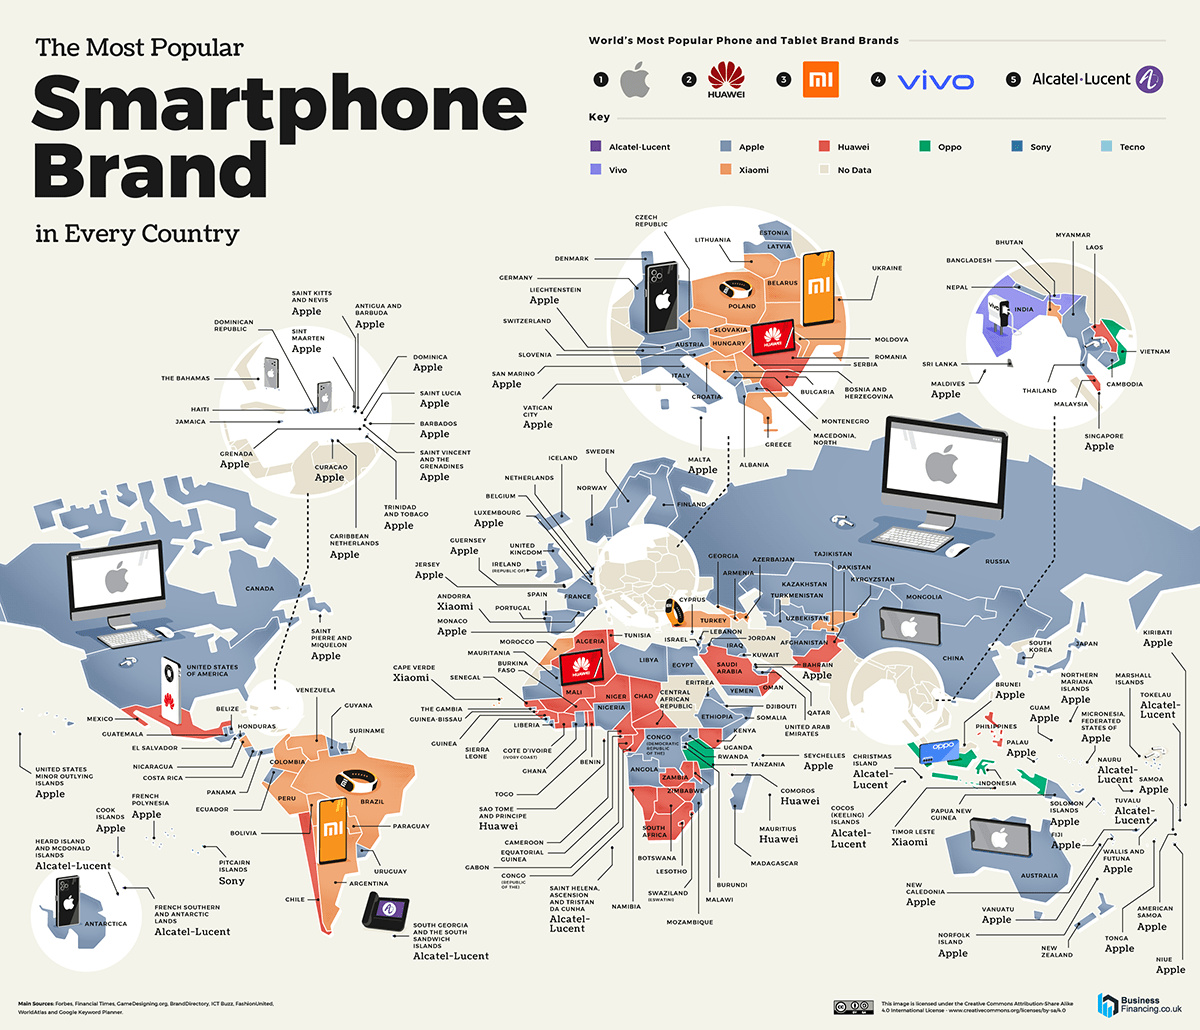 Smartphone brands